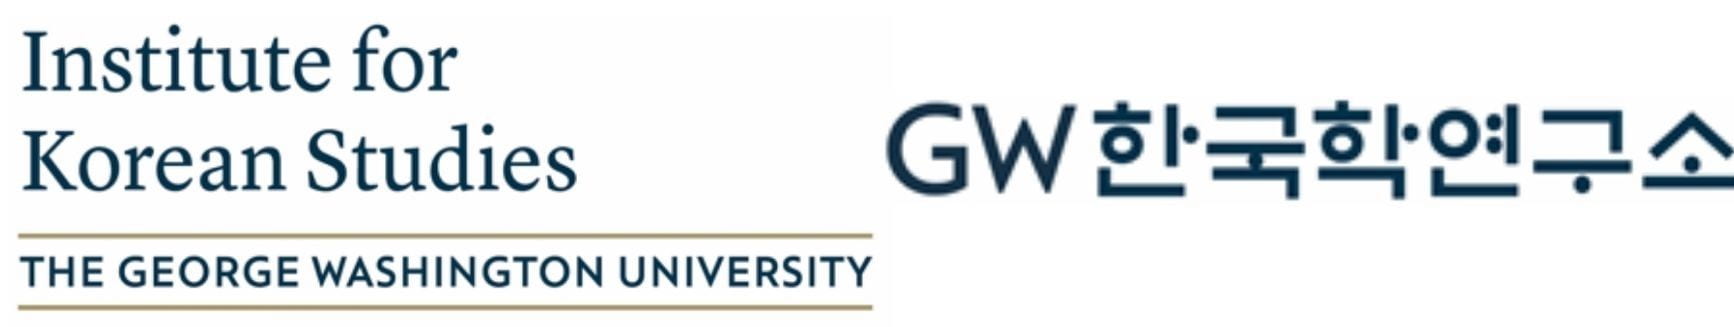 logo of the GW Institute for Korean Studies in English and Korean